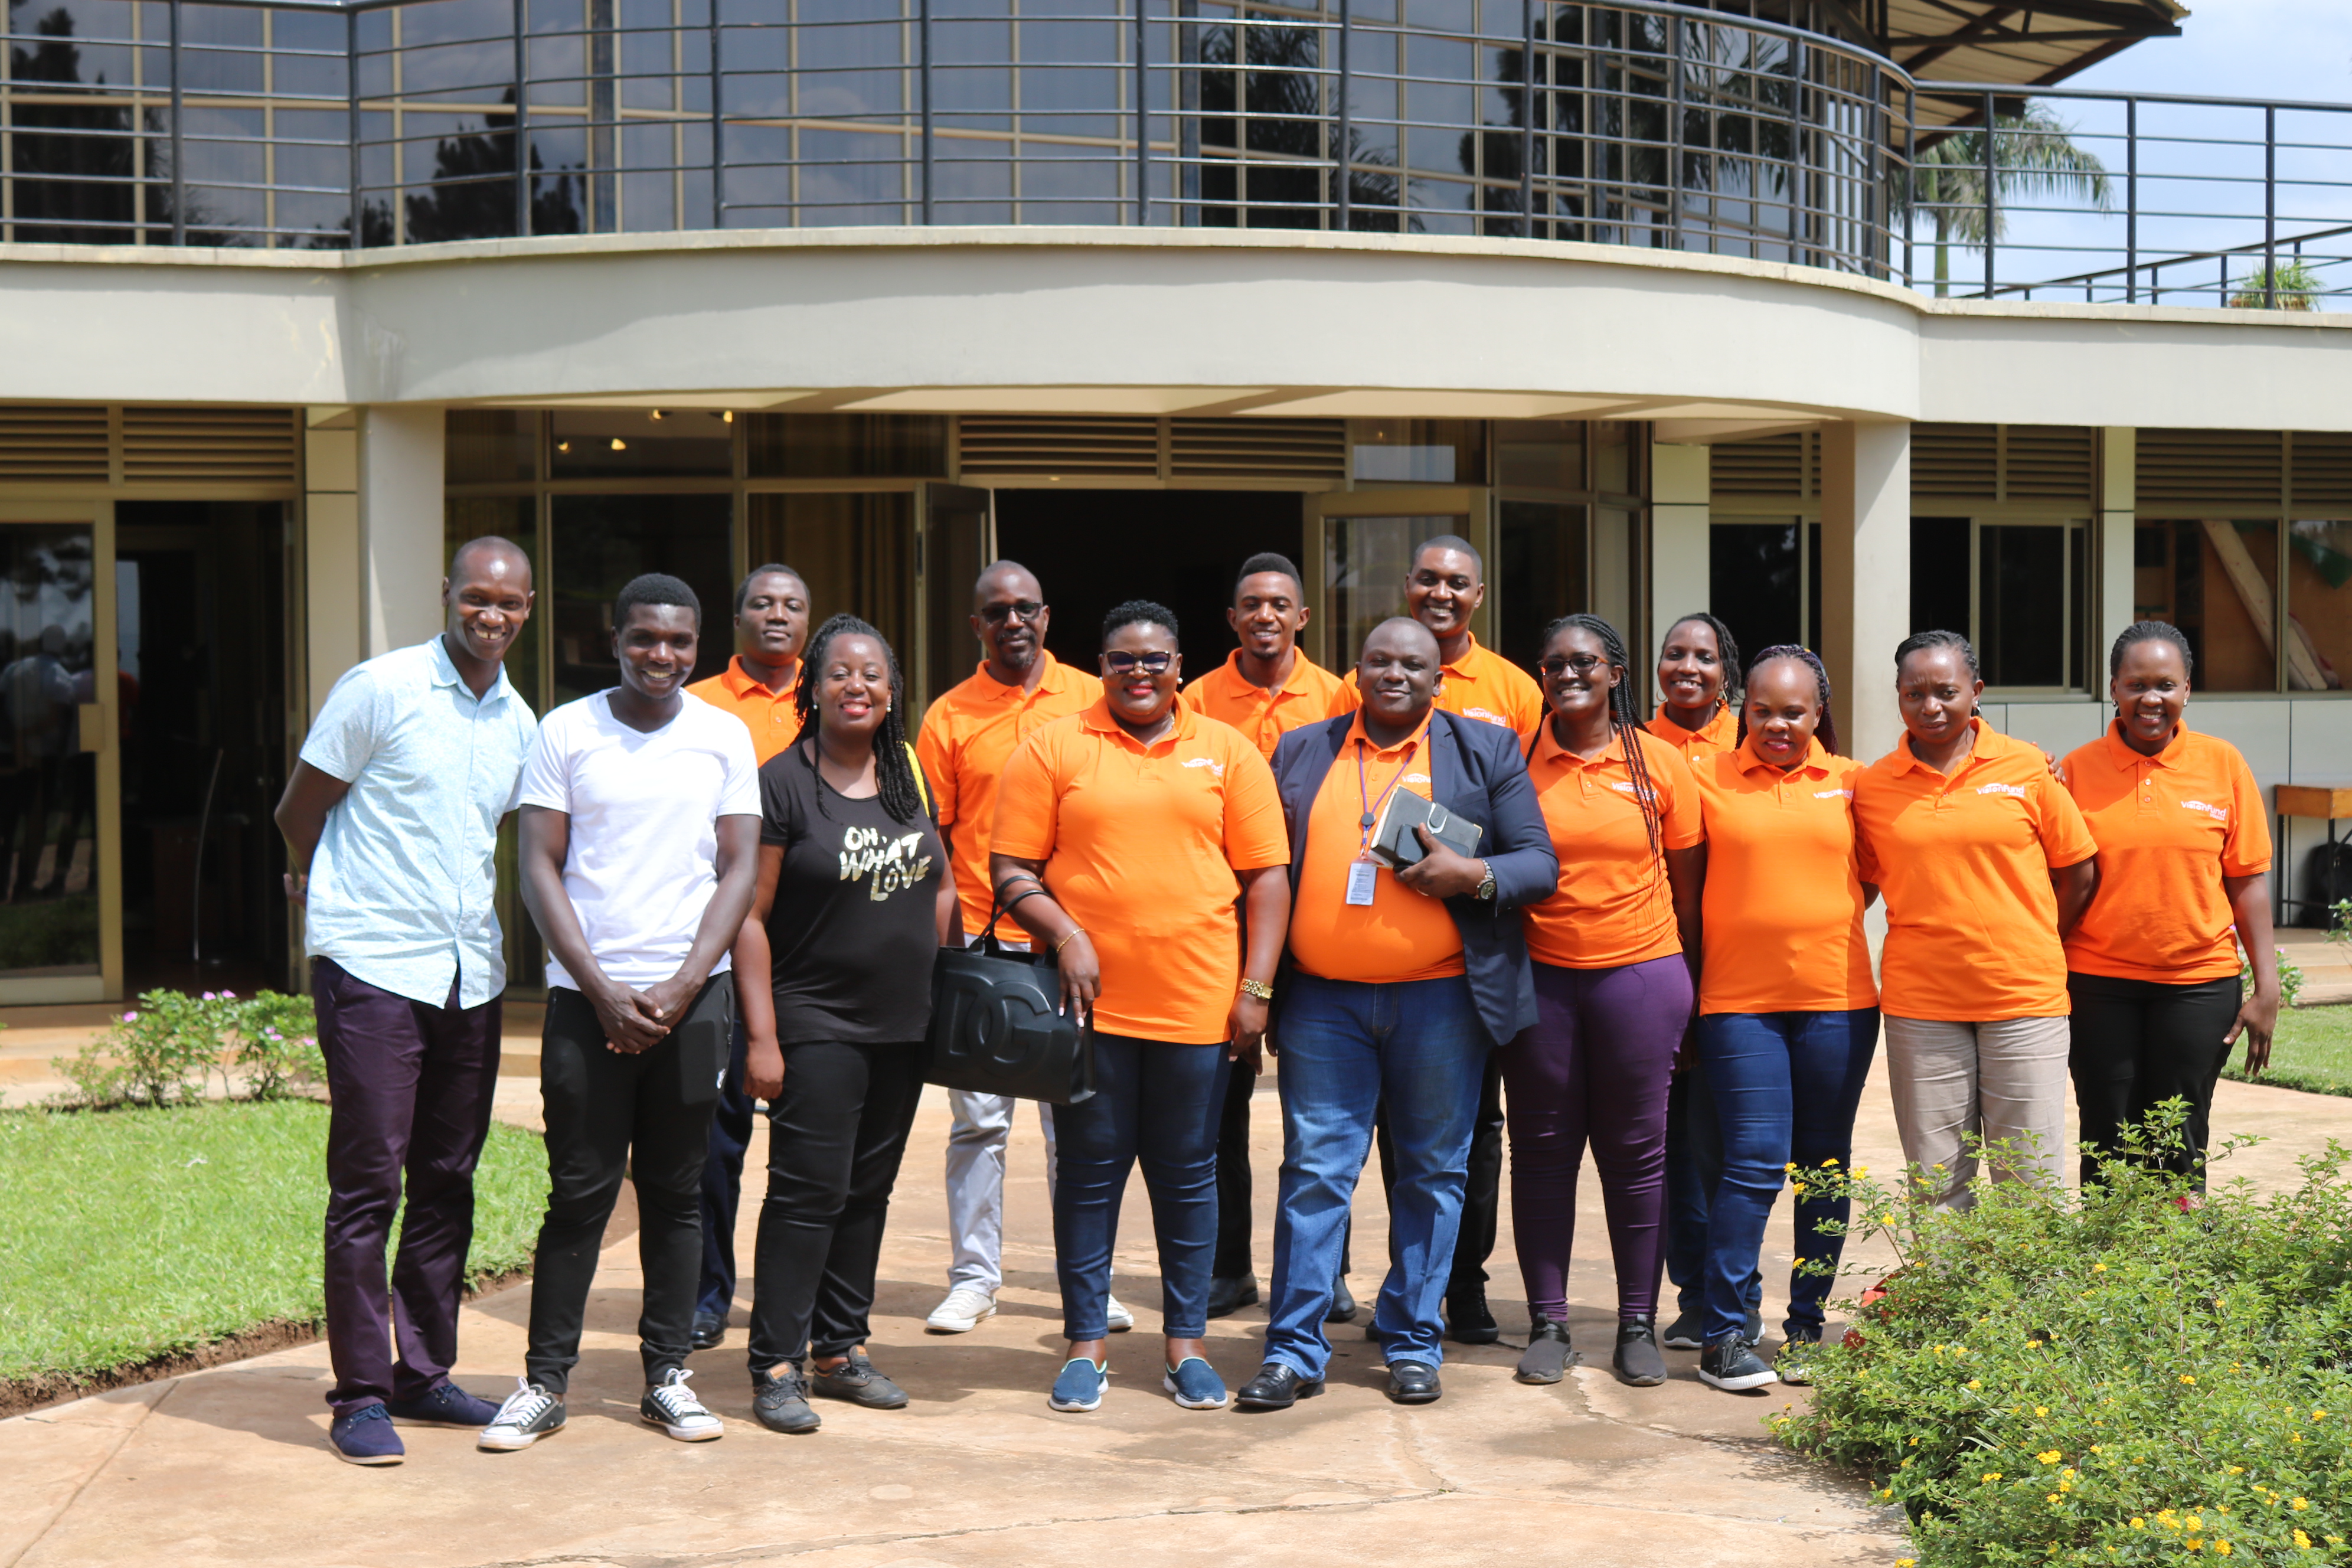 Watoto leadership and VisionFund Uganda staff pose for photo